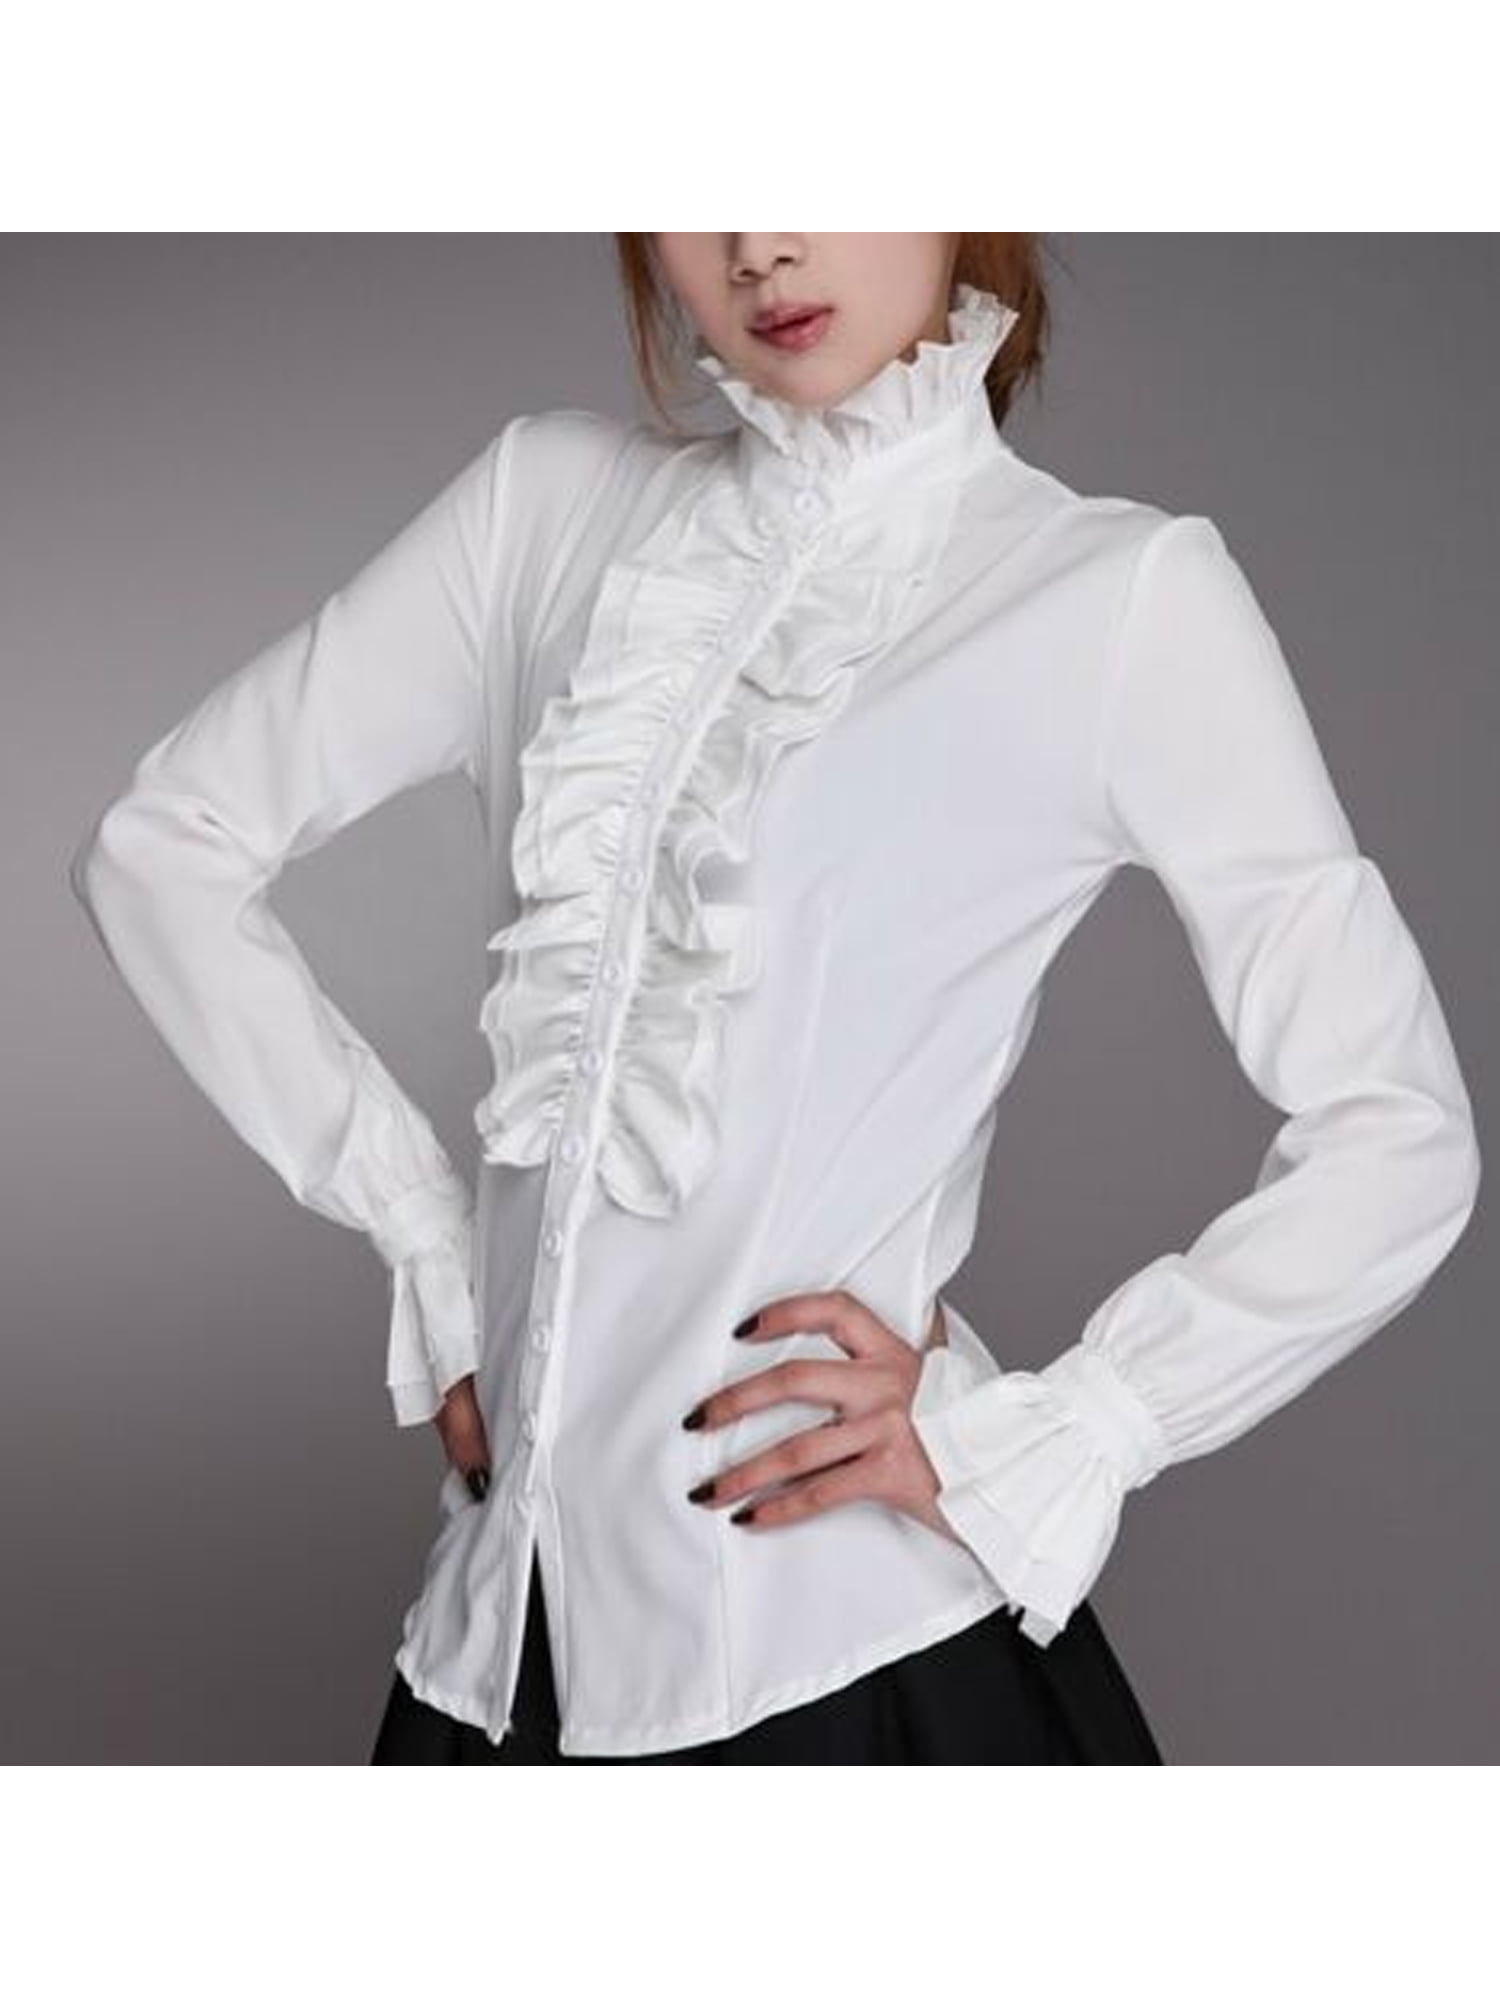 disinfect Senior citizens present Victorian Womens Long Sleeves Tops High Neck Frilly Ruffle Shirt Blouse -  Walmart.com